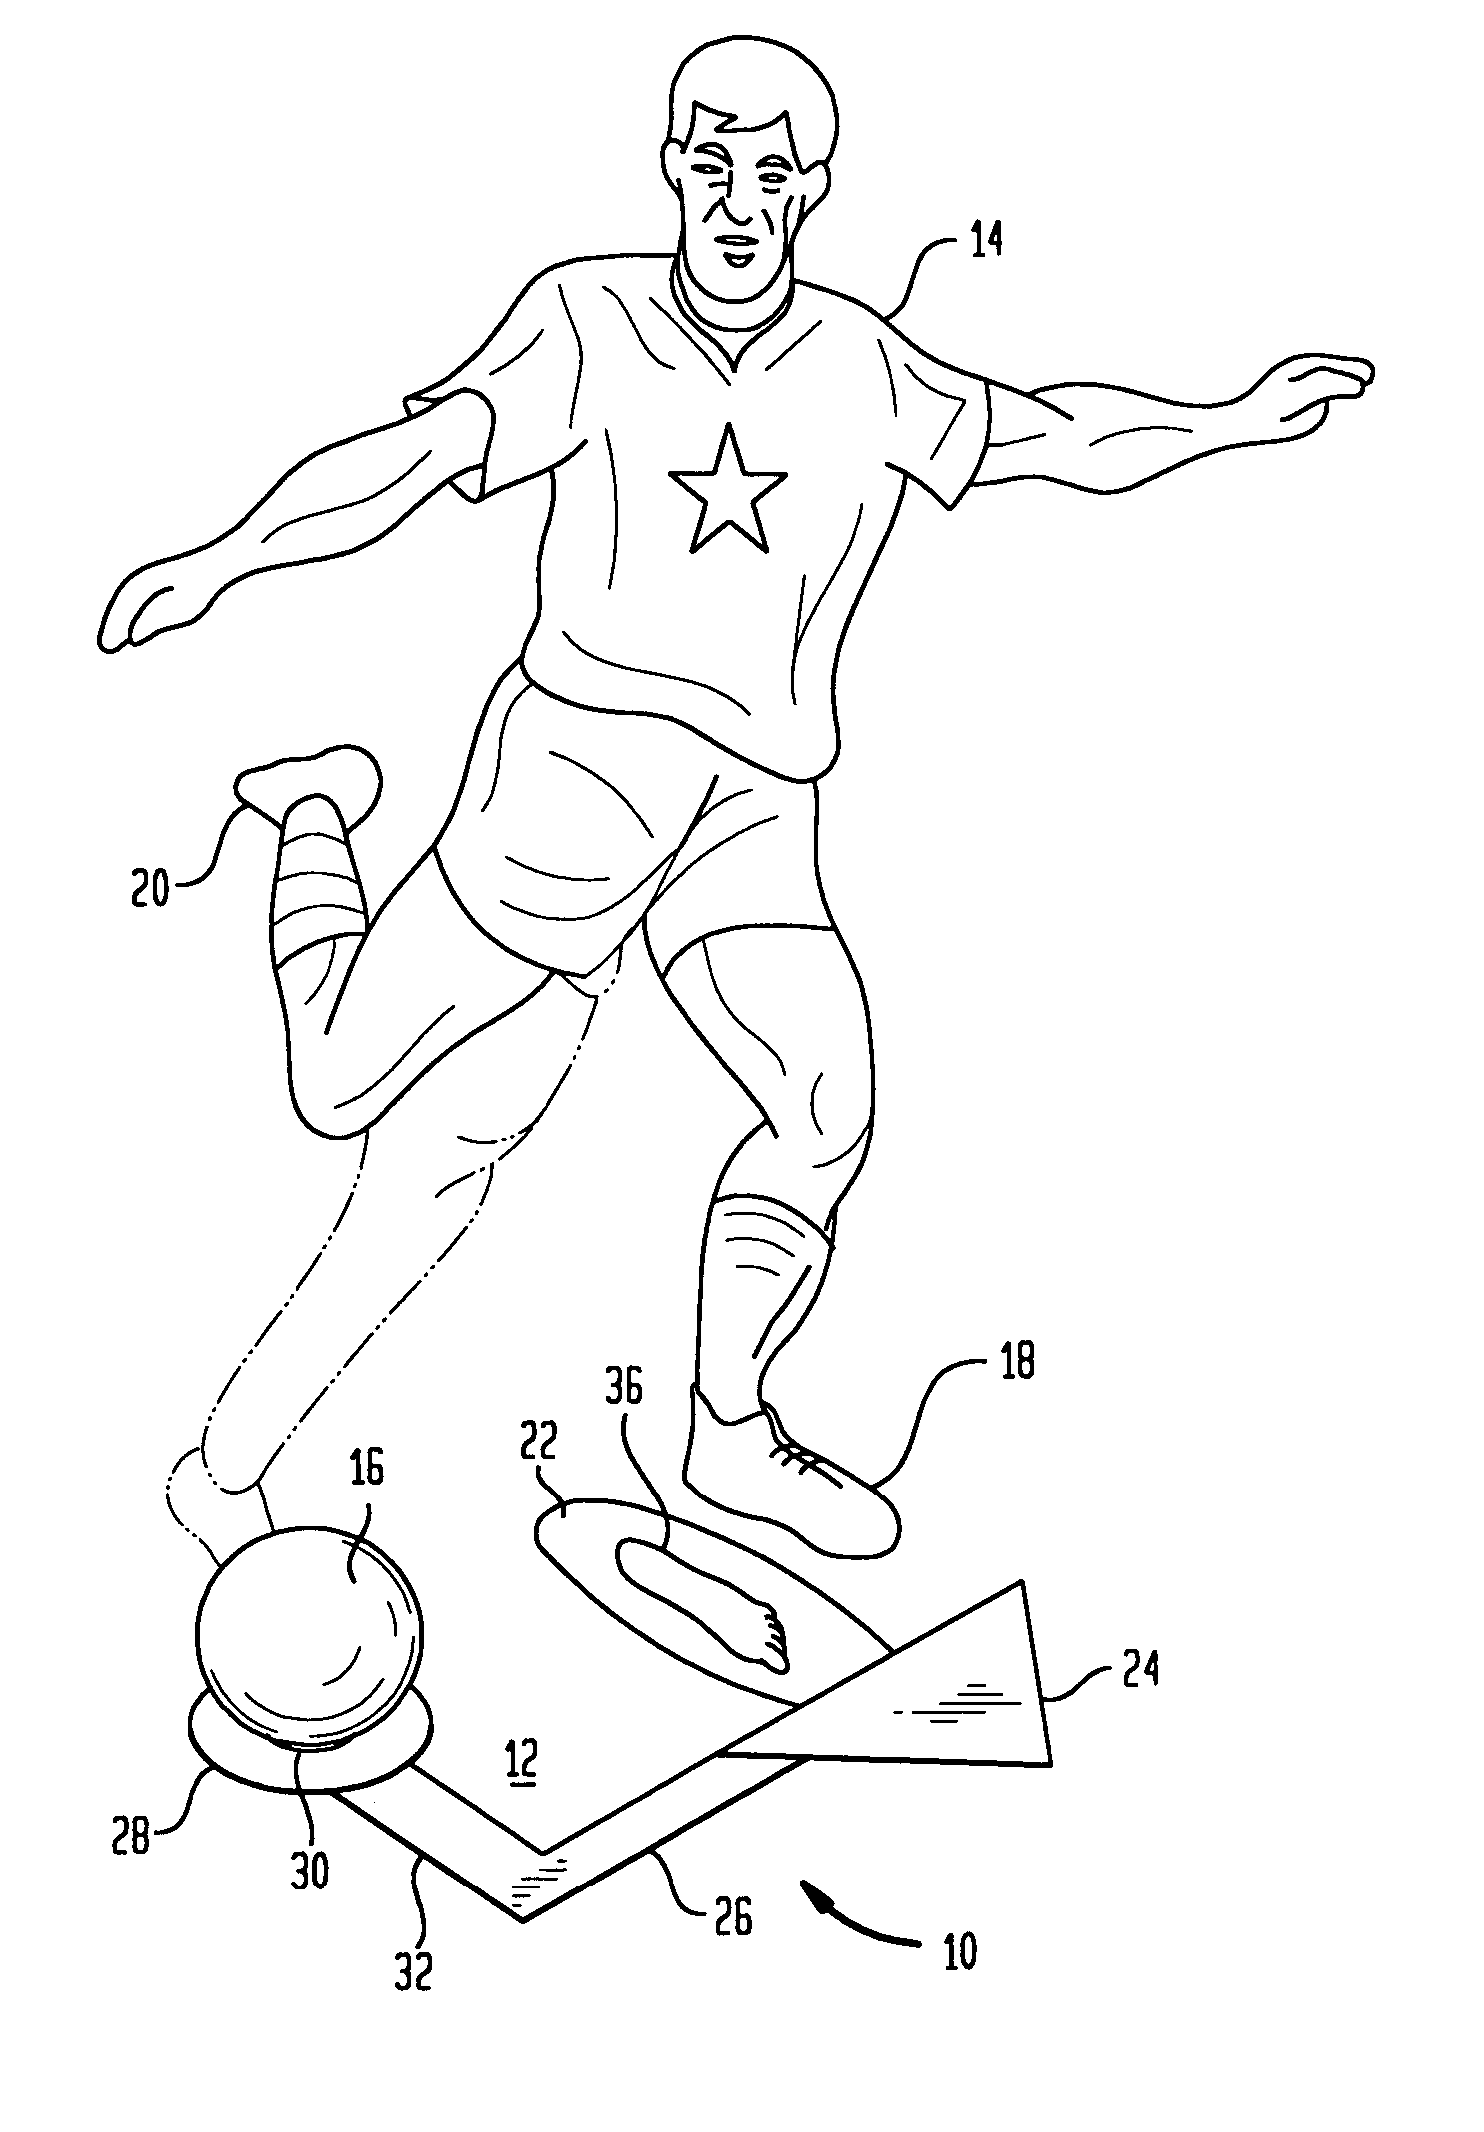 Soccer ball kicking training device